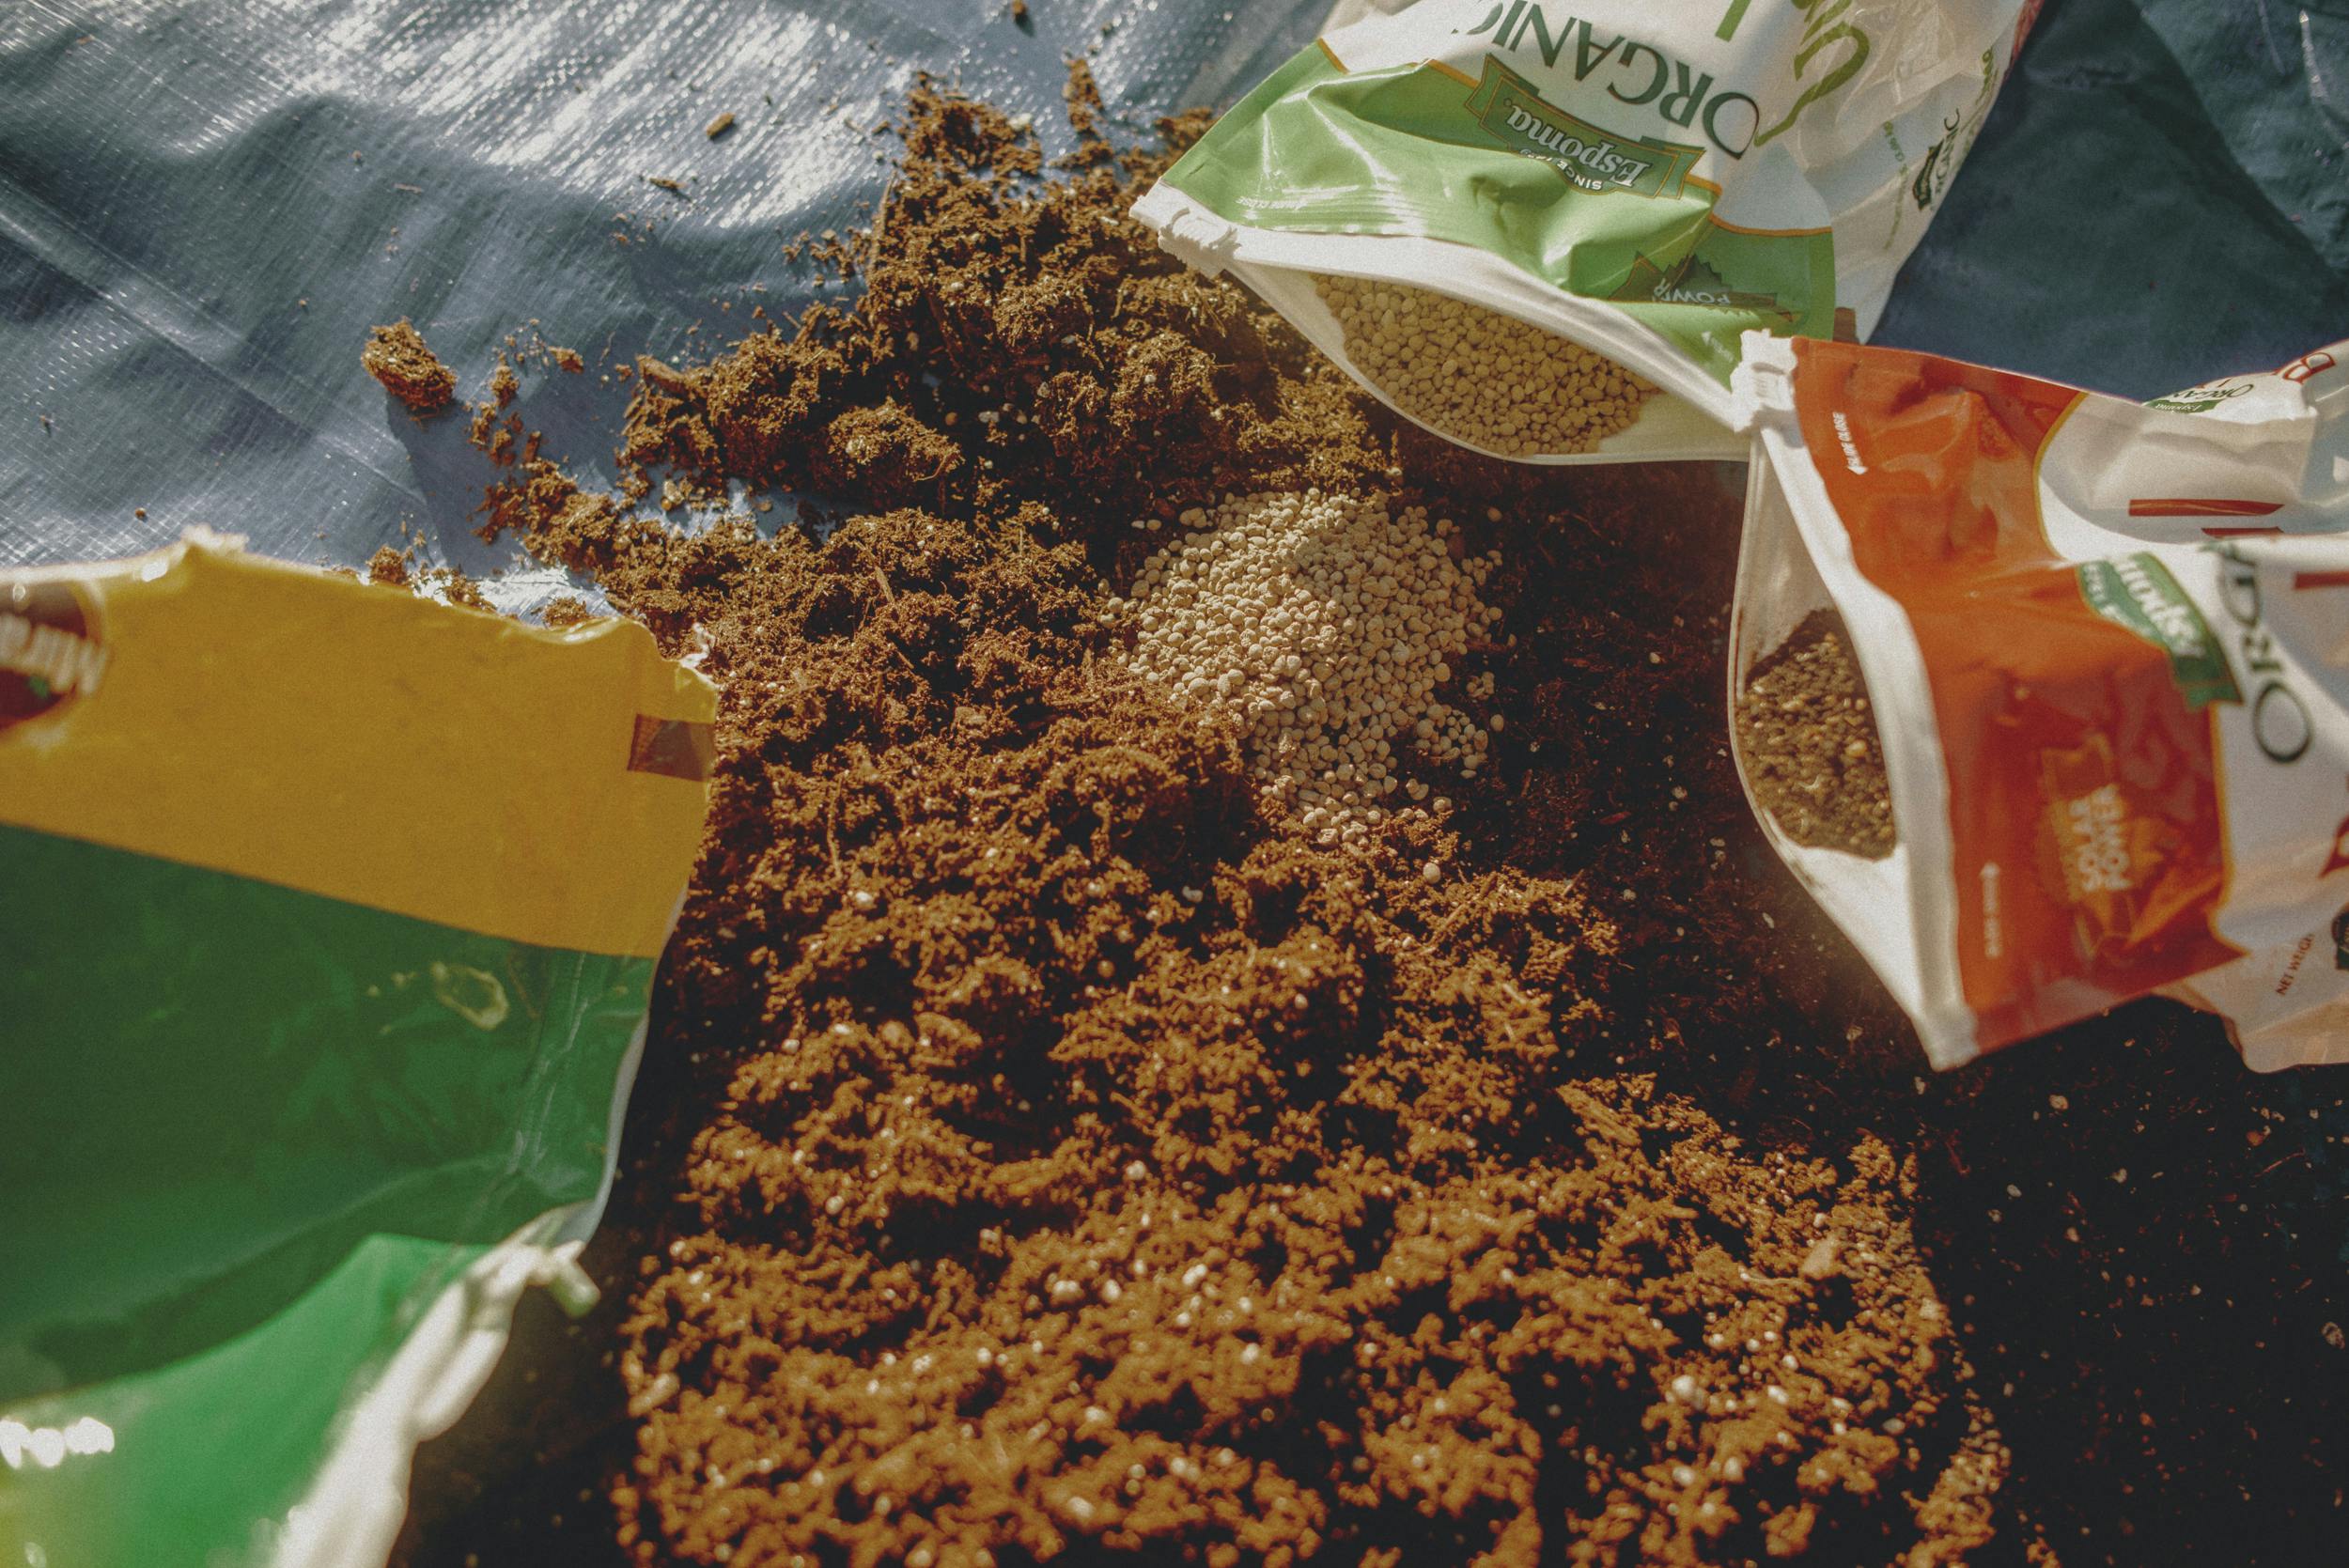 How to Make Super Soil 4 How To Make Super Soil And Grow Better Cannabis Plants